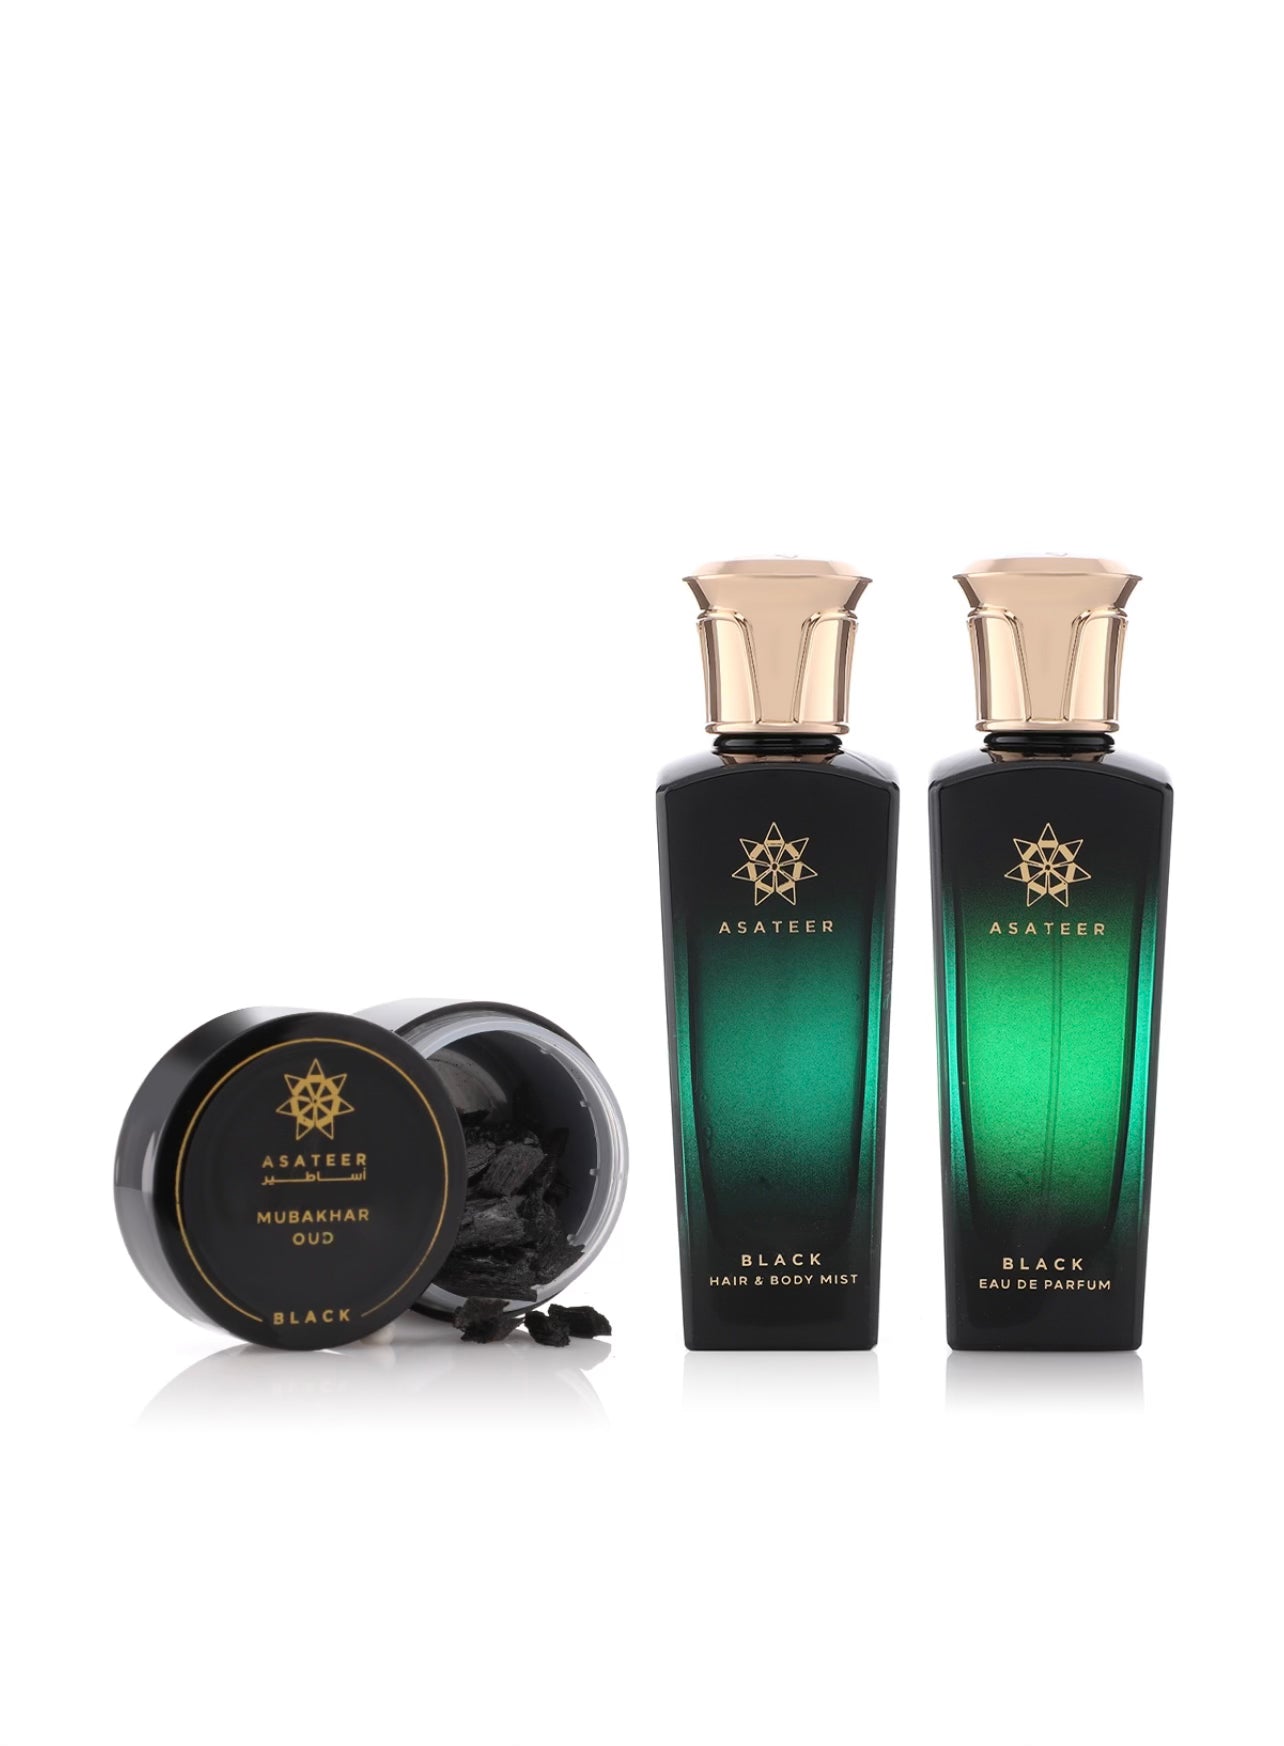 Asateer Black Perfume Collection - 3 pcs